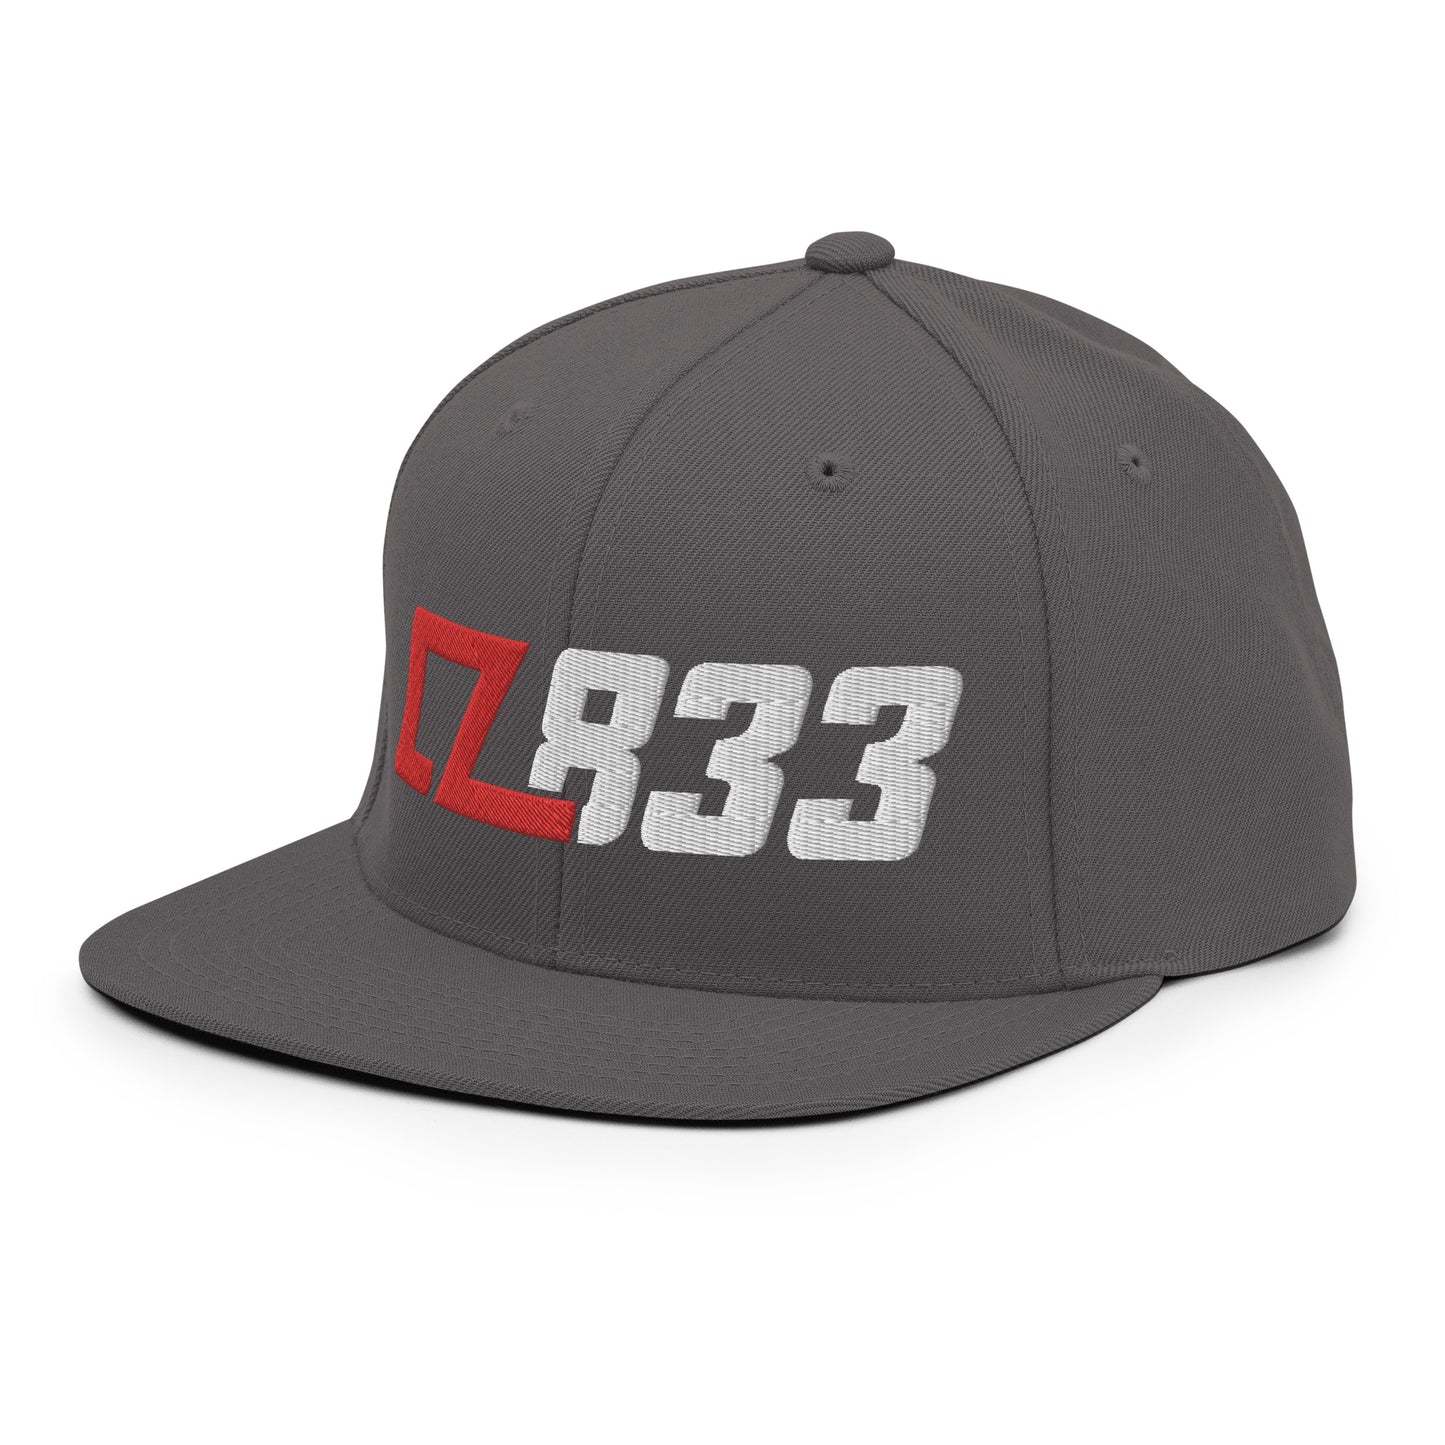 CZ833 Snapback Hat